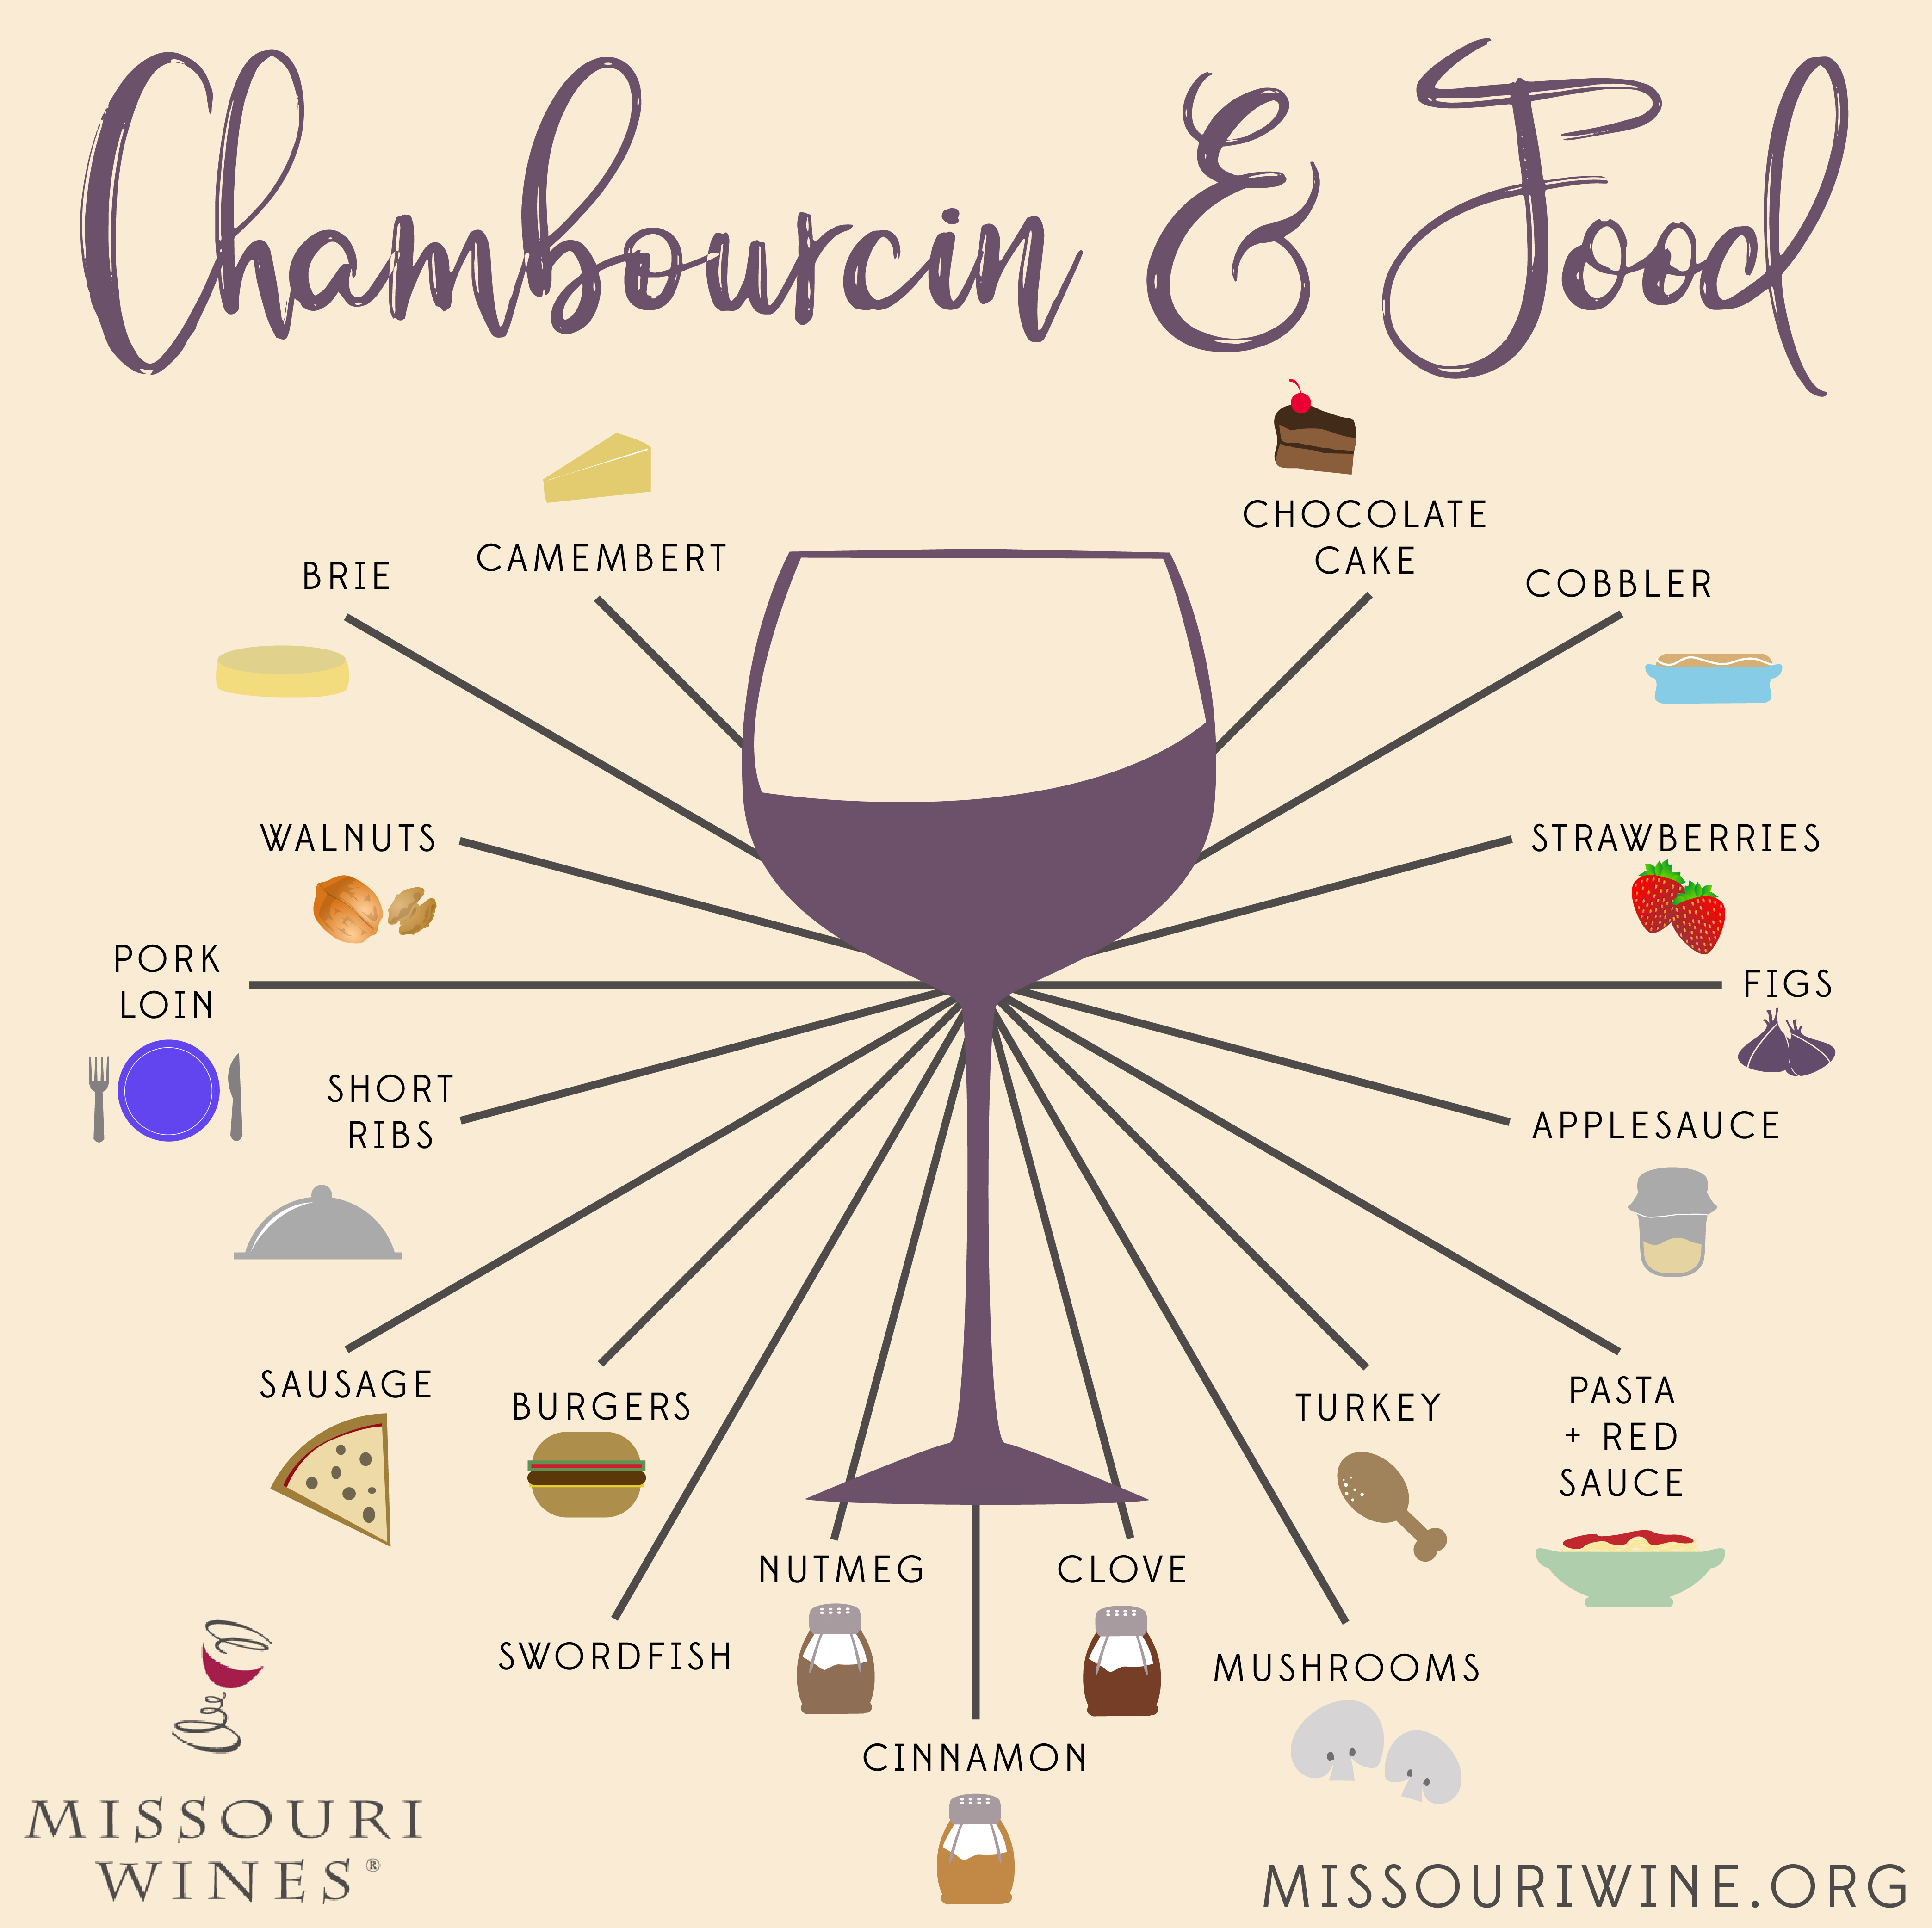 Chambourcin and Food